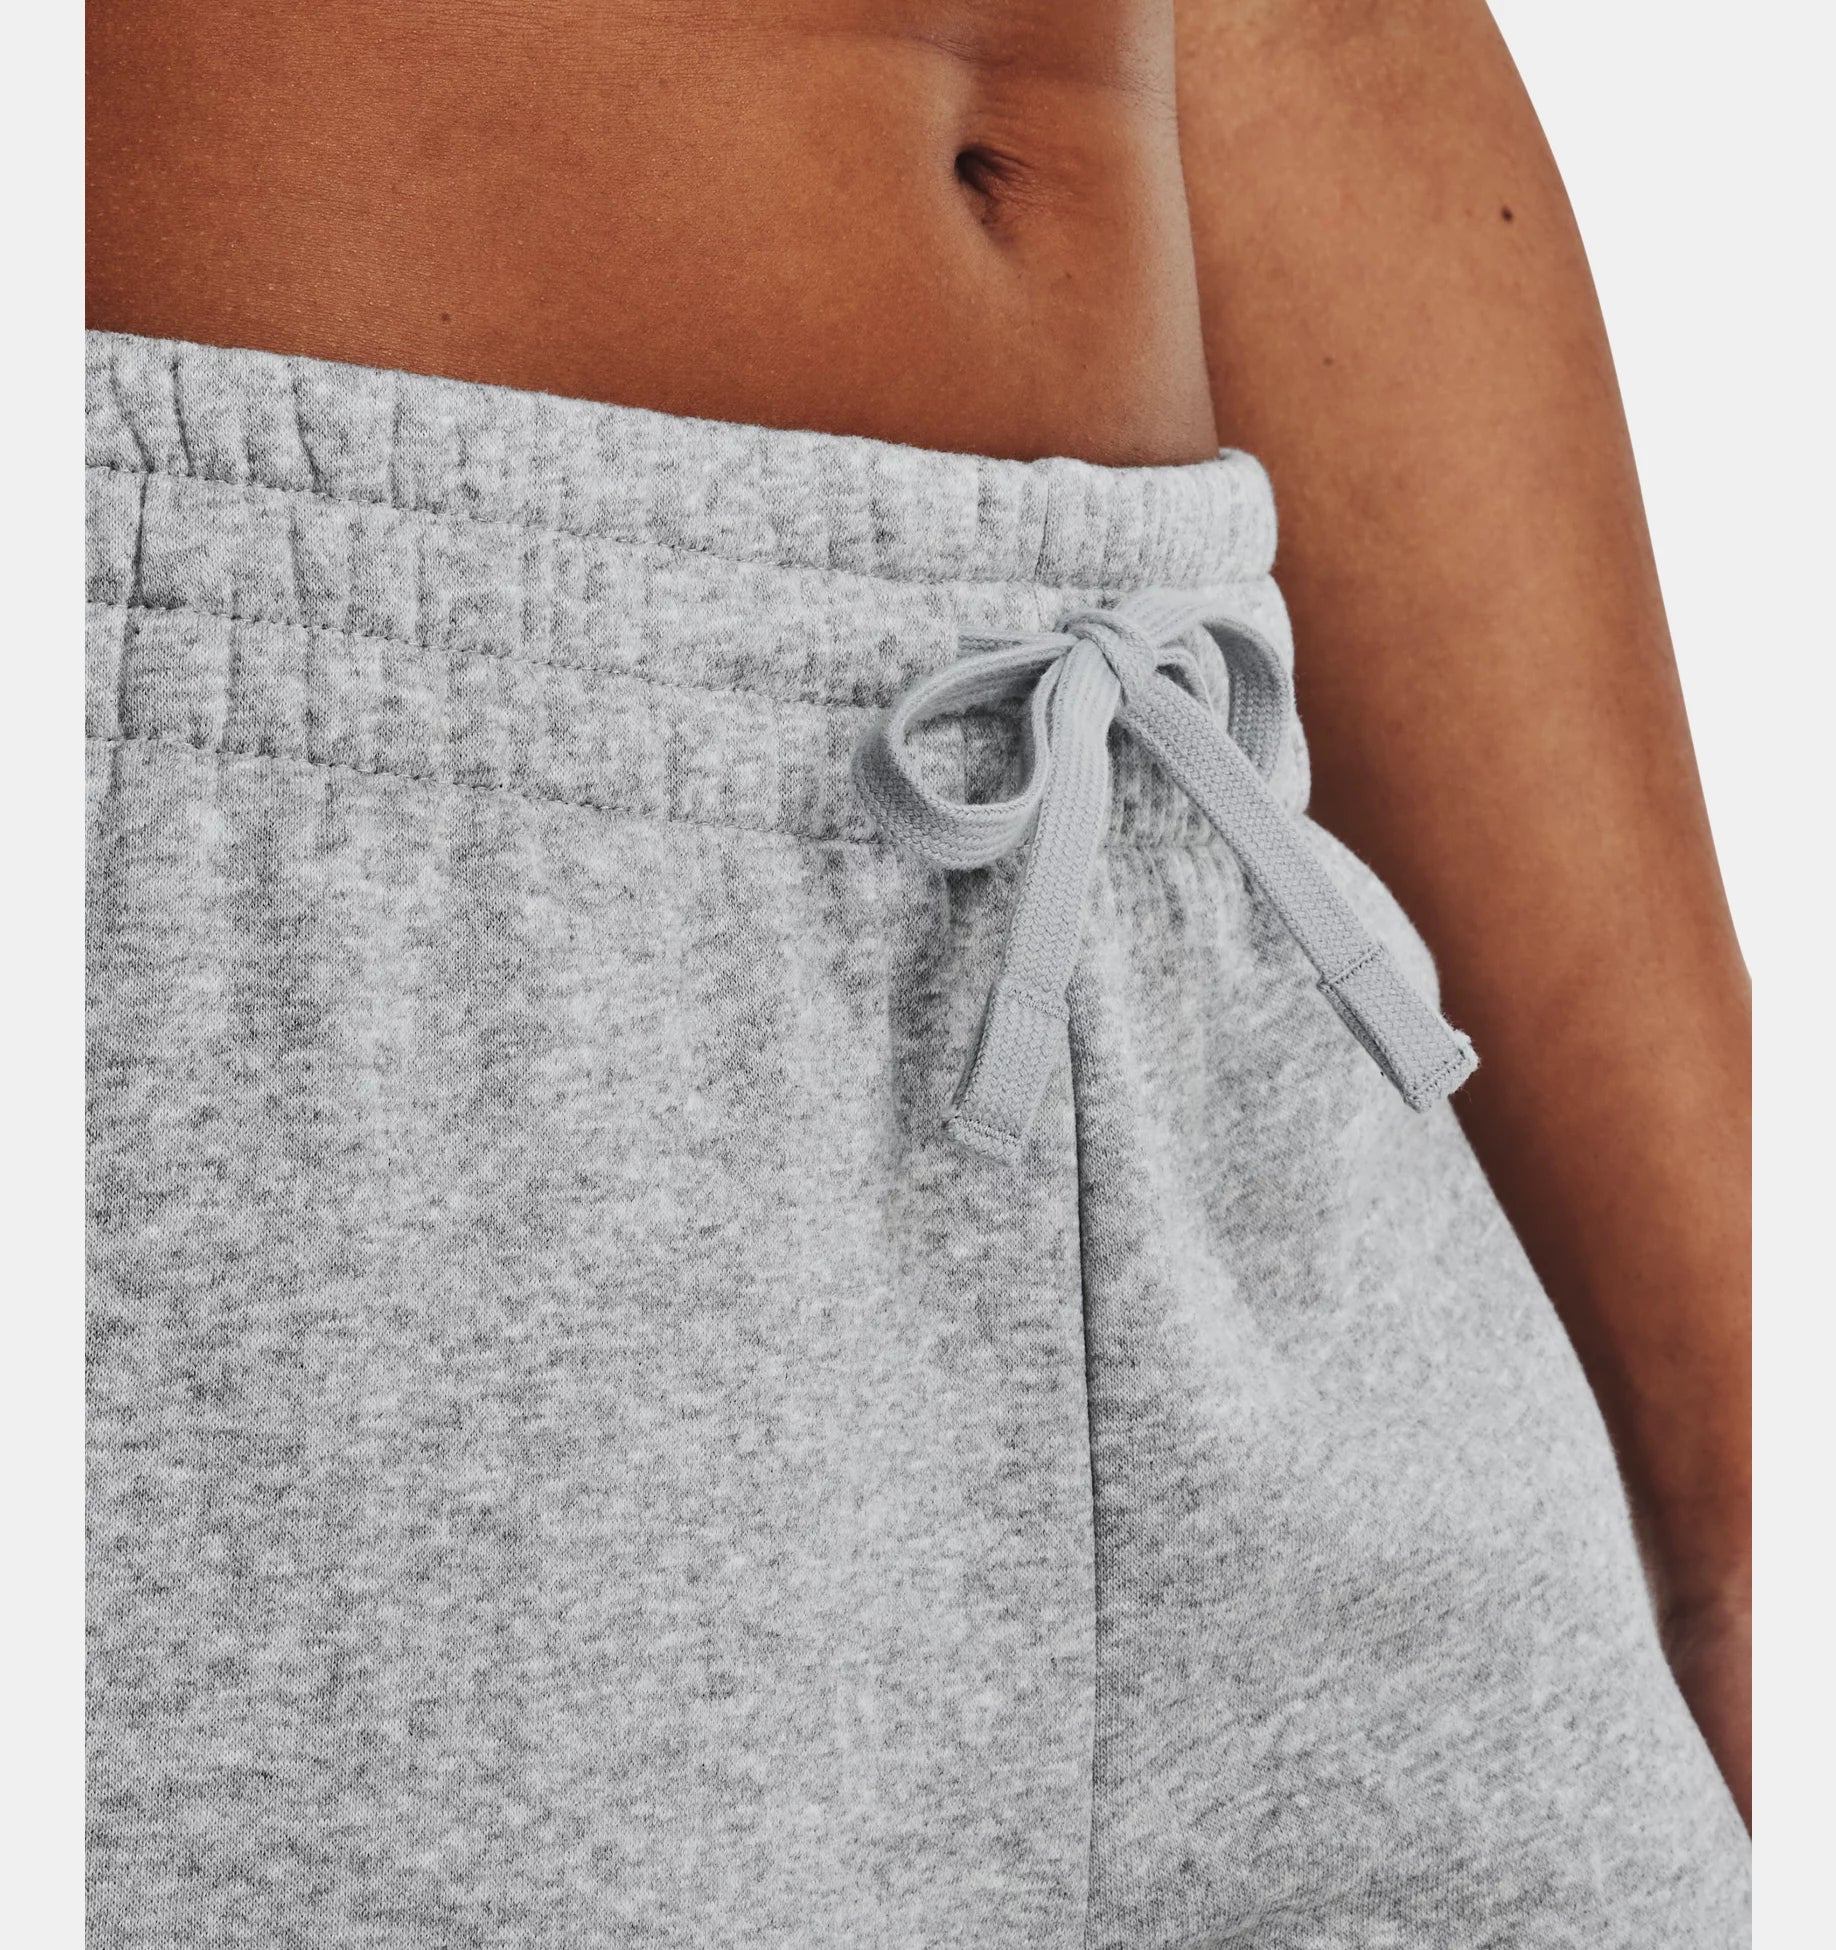 Pantalon de Jogging en Molleton UA Rival Pour Femmes - Grey-012